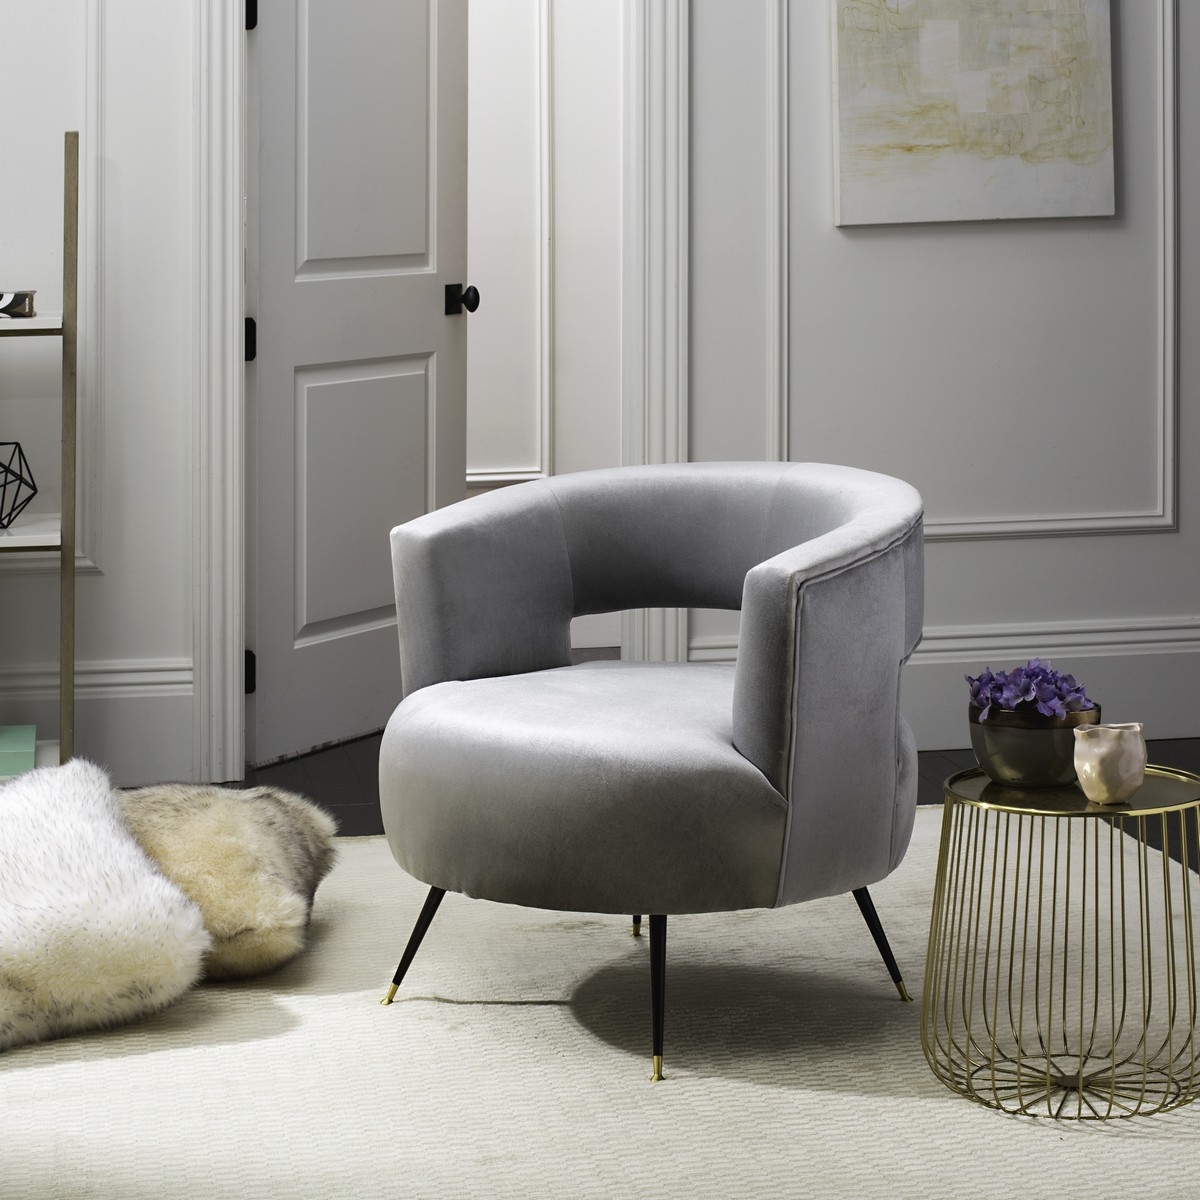 Manet Velvet Retro Mid Century Accent Chair - Light Grey - Arlo Home - Image 3